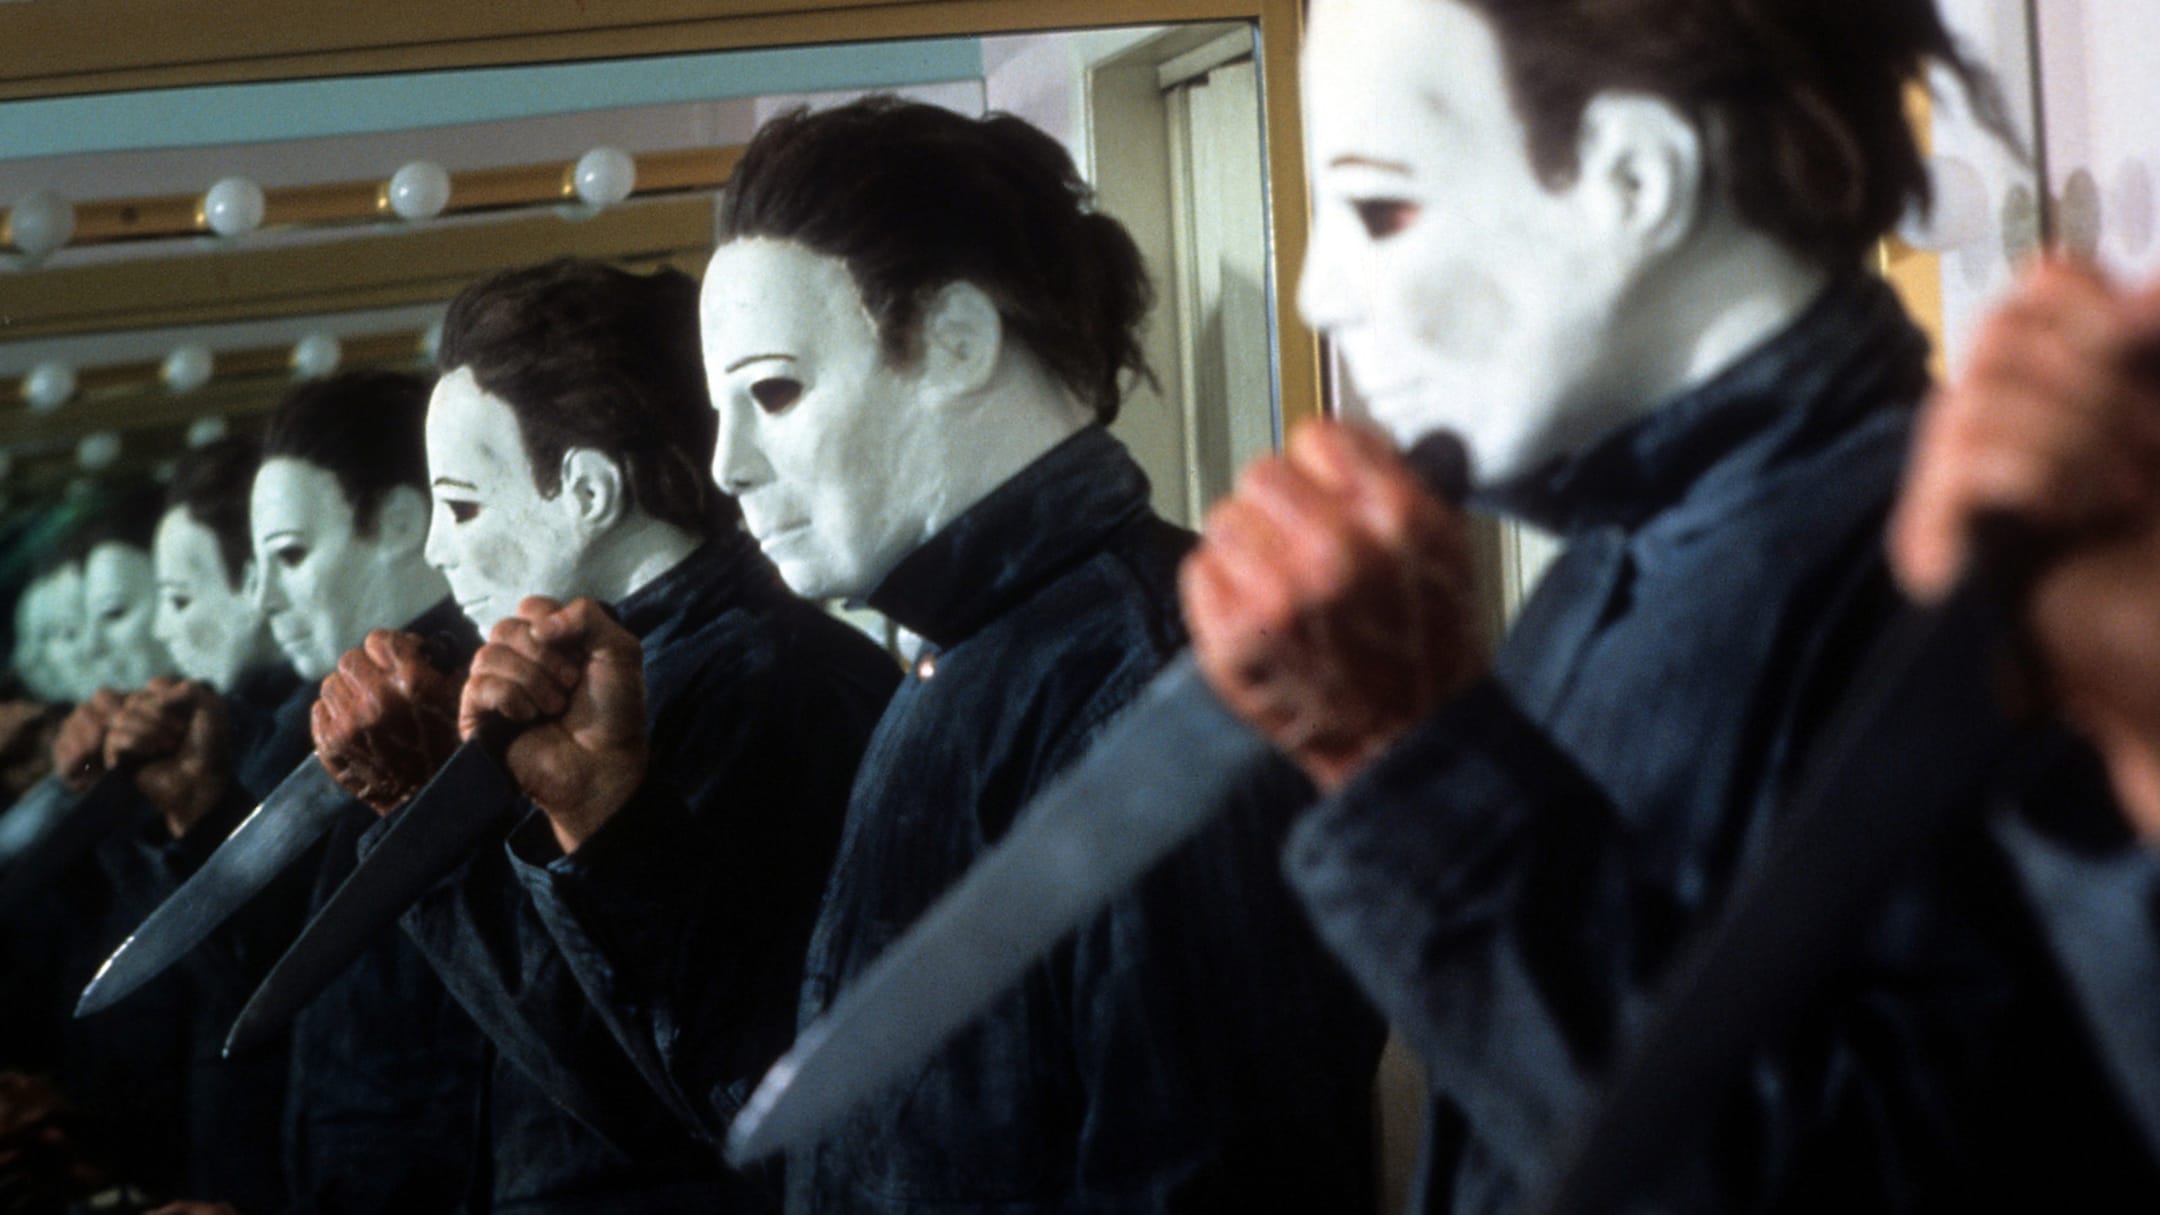 Screen Time: Silver Scream Con delivers rock, horror film favorites